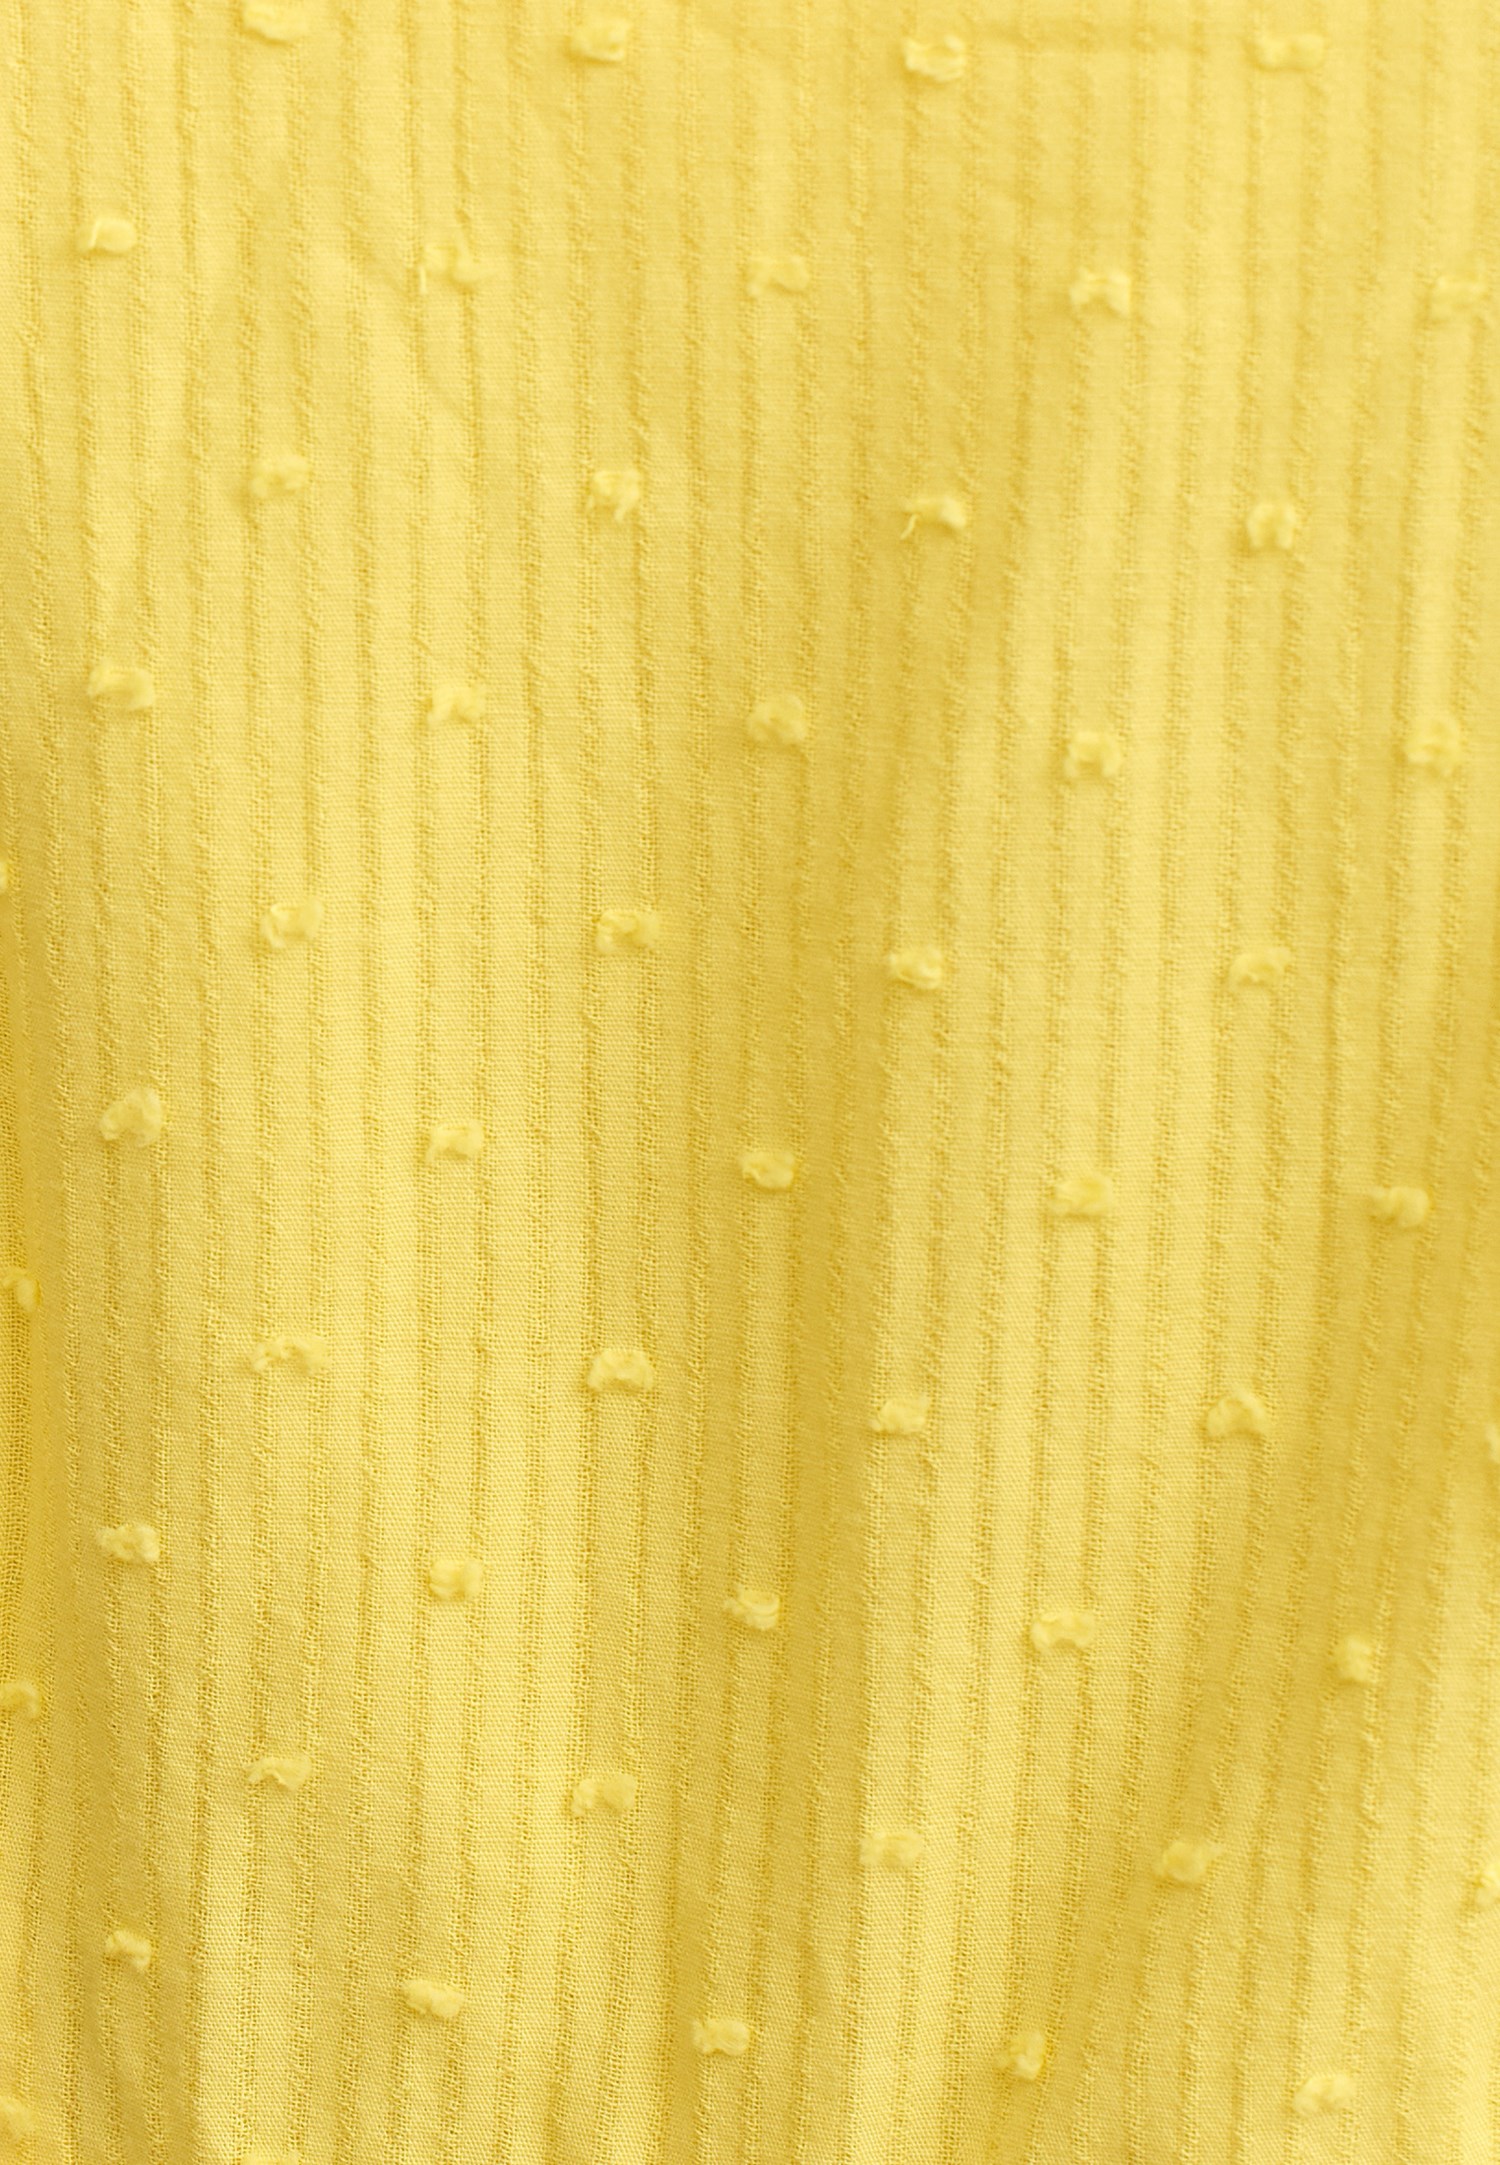 Women Yellow Ruffled Mini Dress